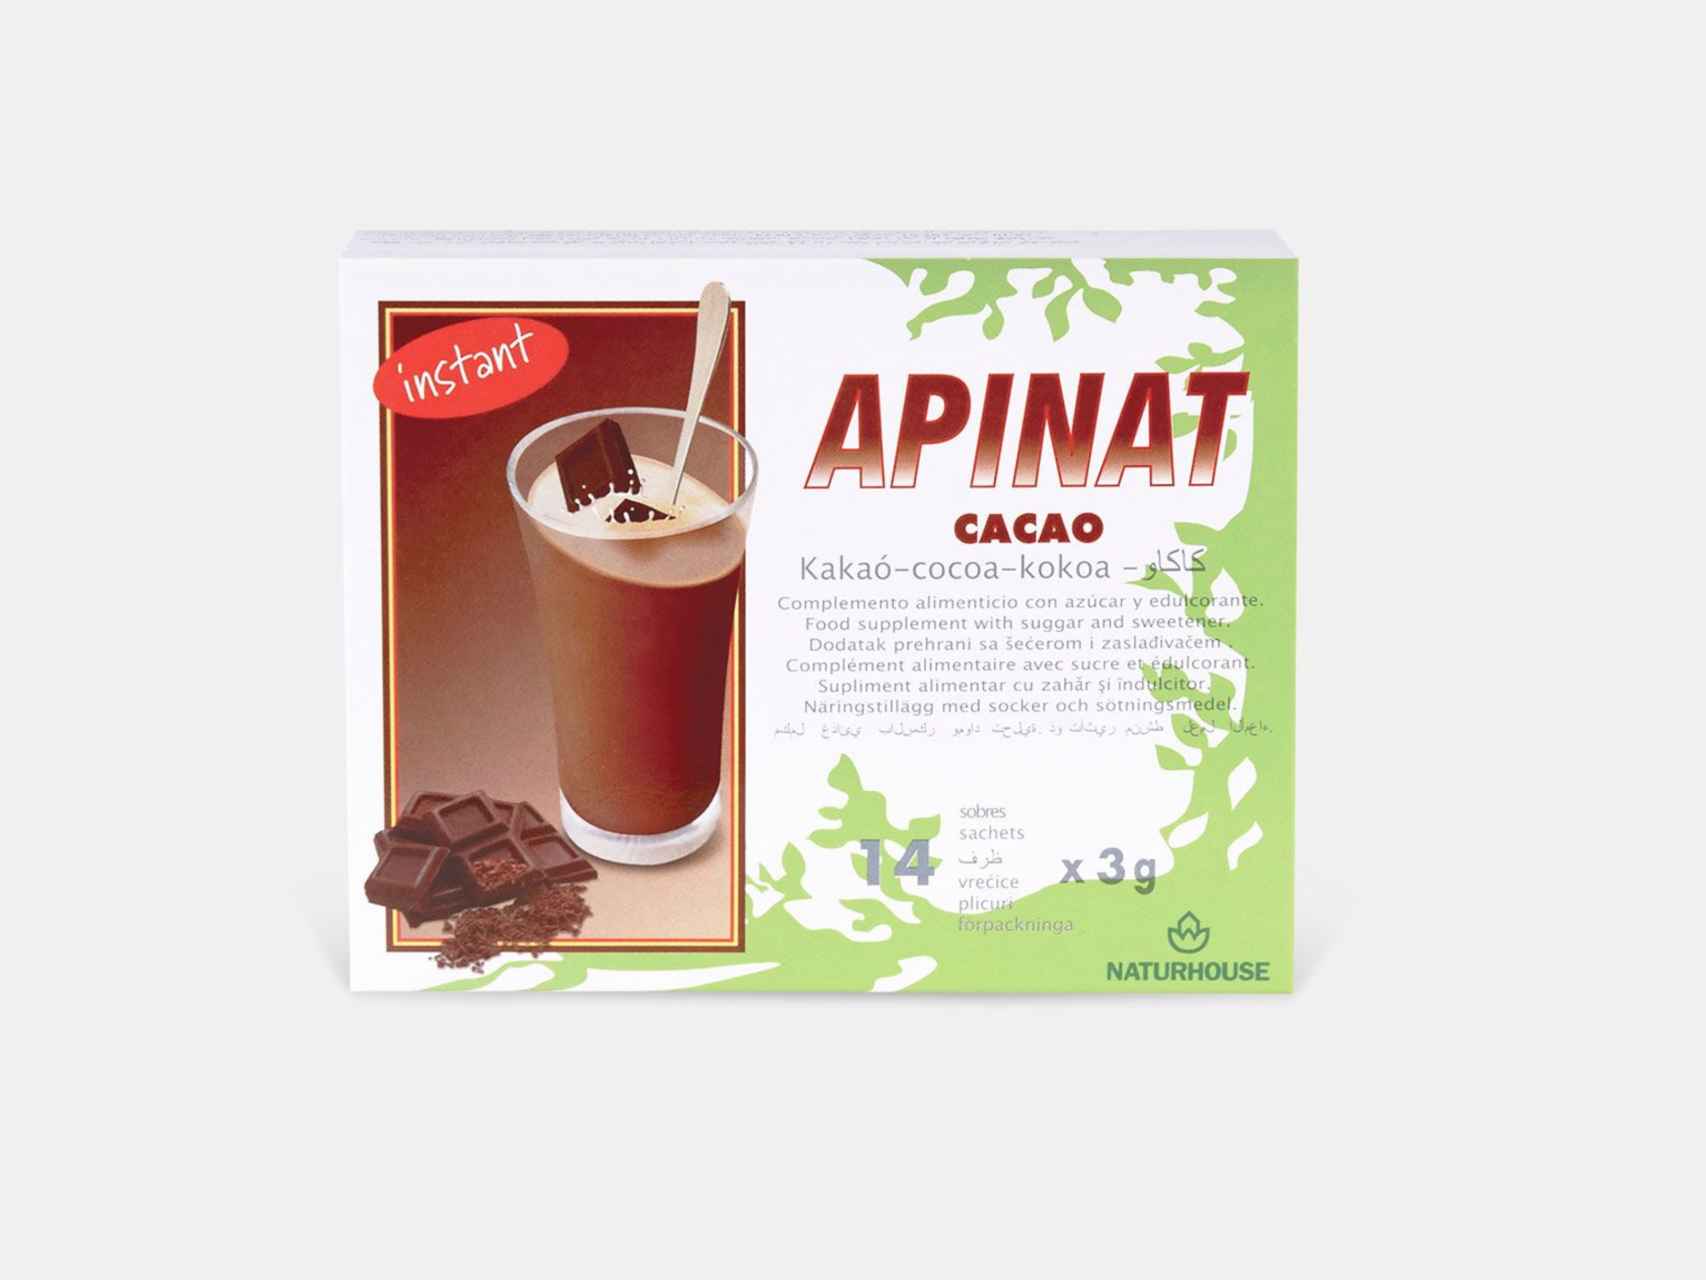 Cacao Apinat